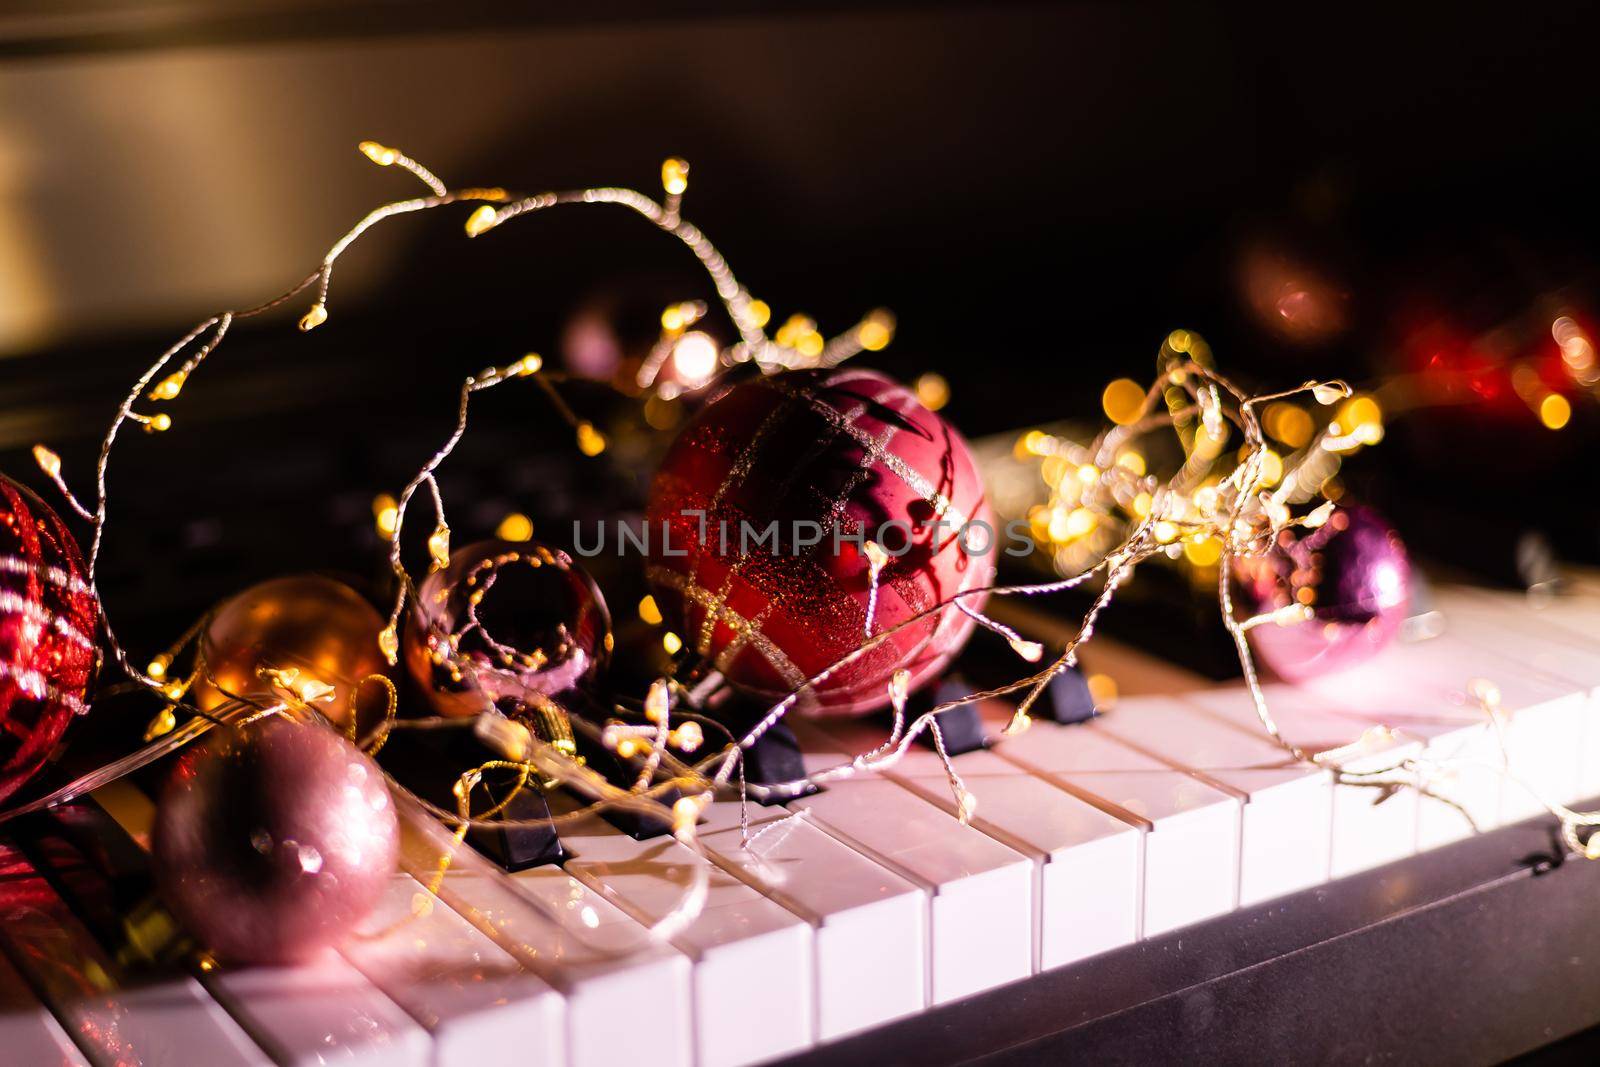 Piano keys with Christmas decorations, closeup